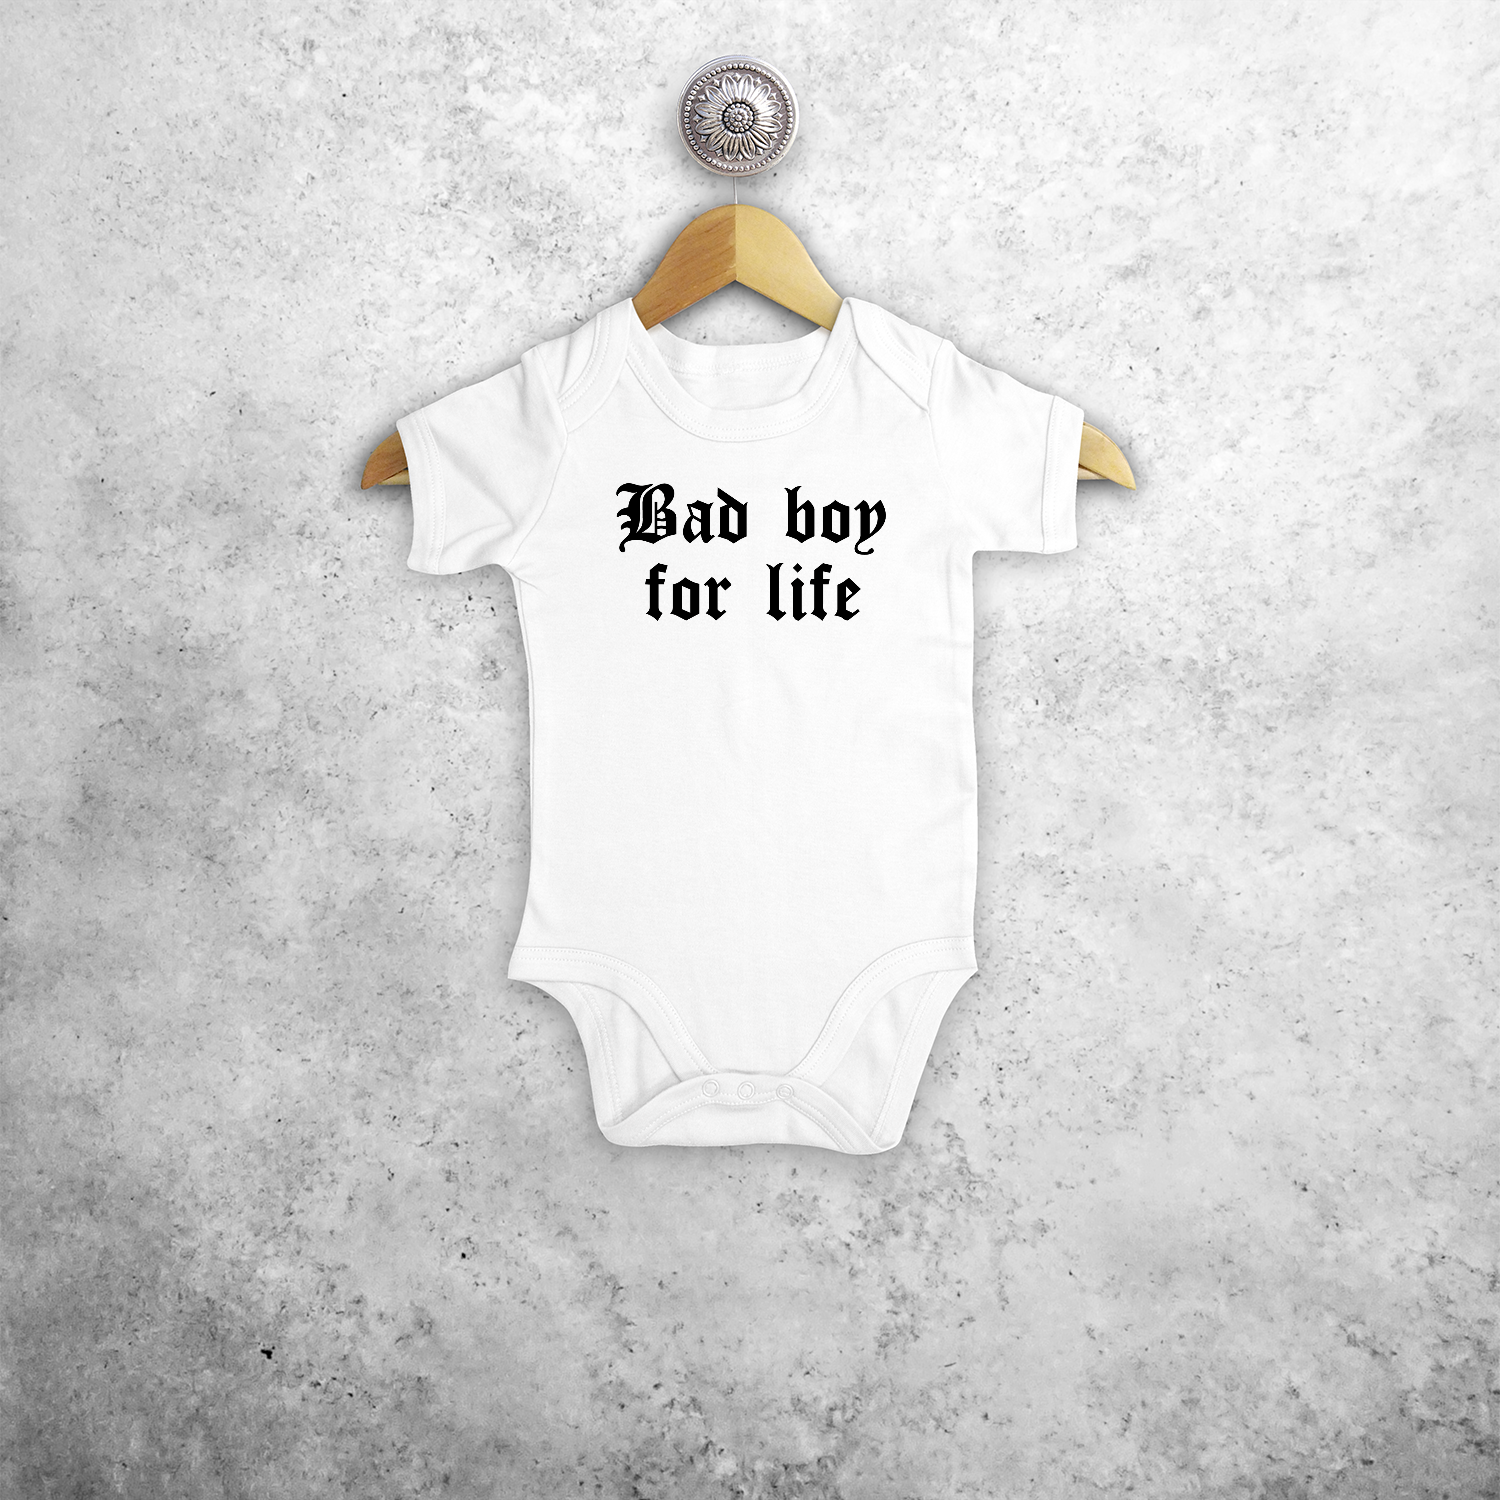 'Bad boy for life' baby kruippakje met korte mouwen